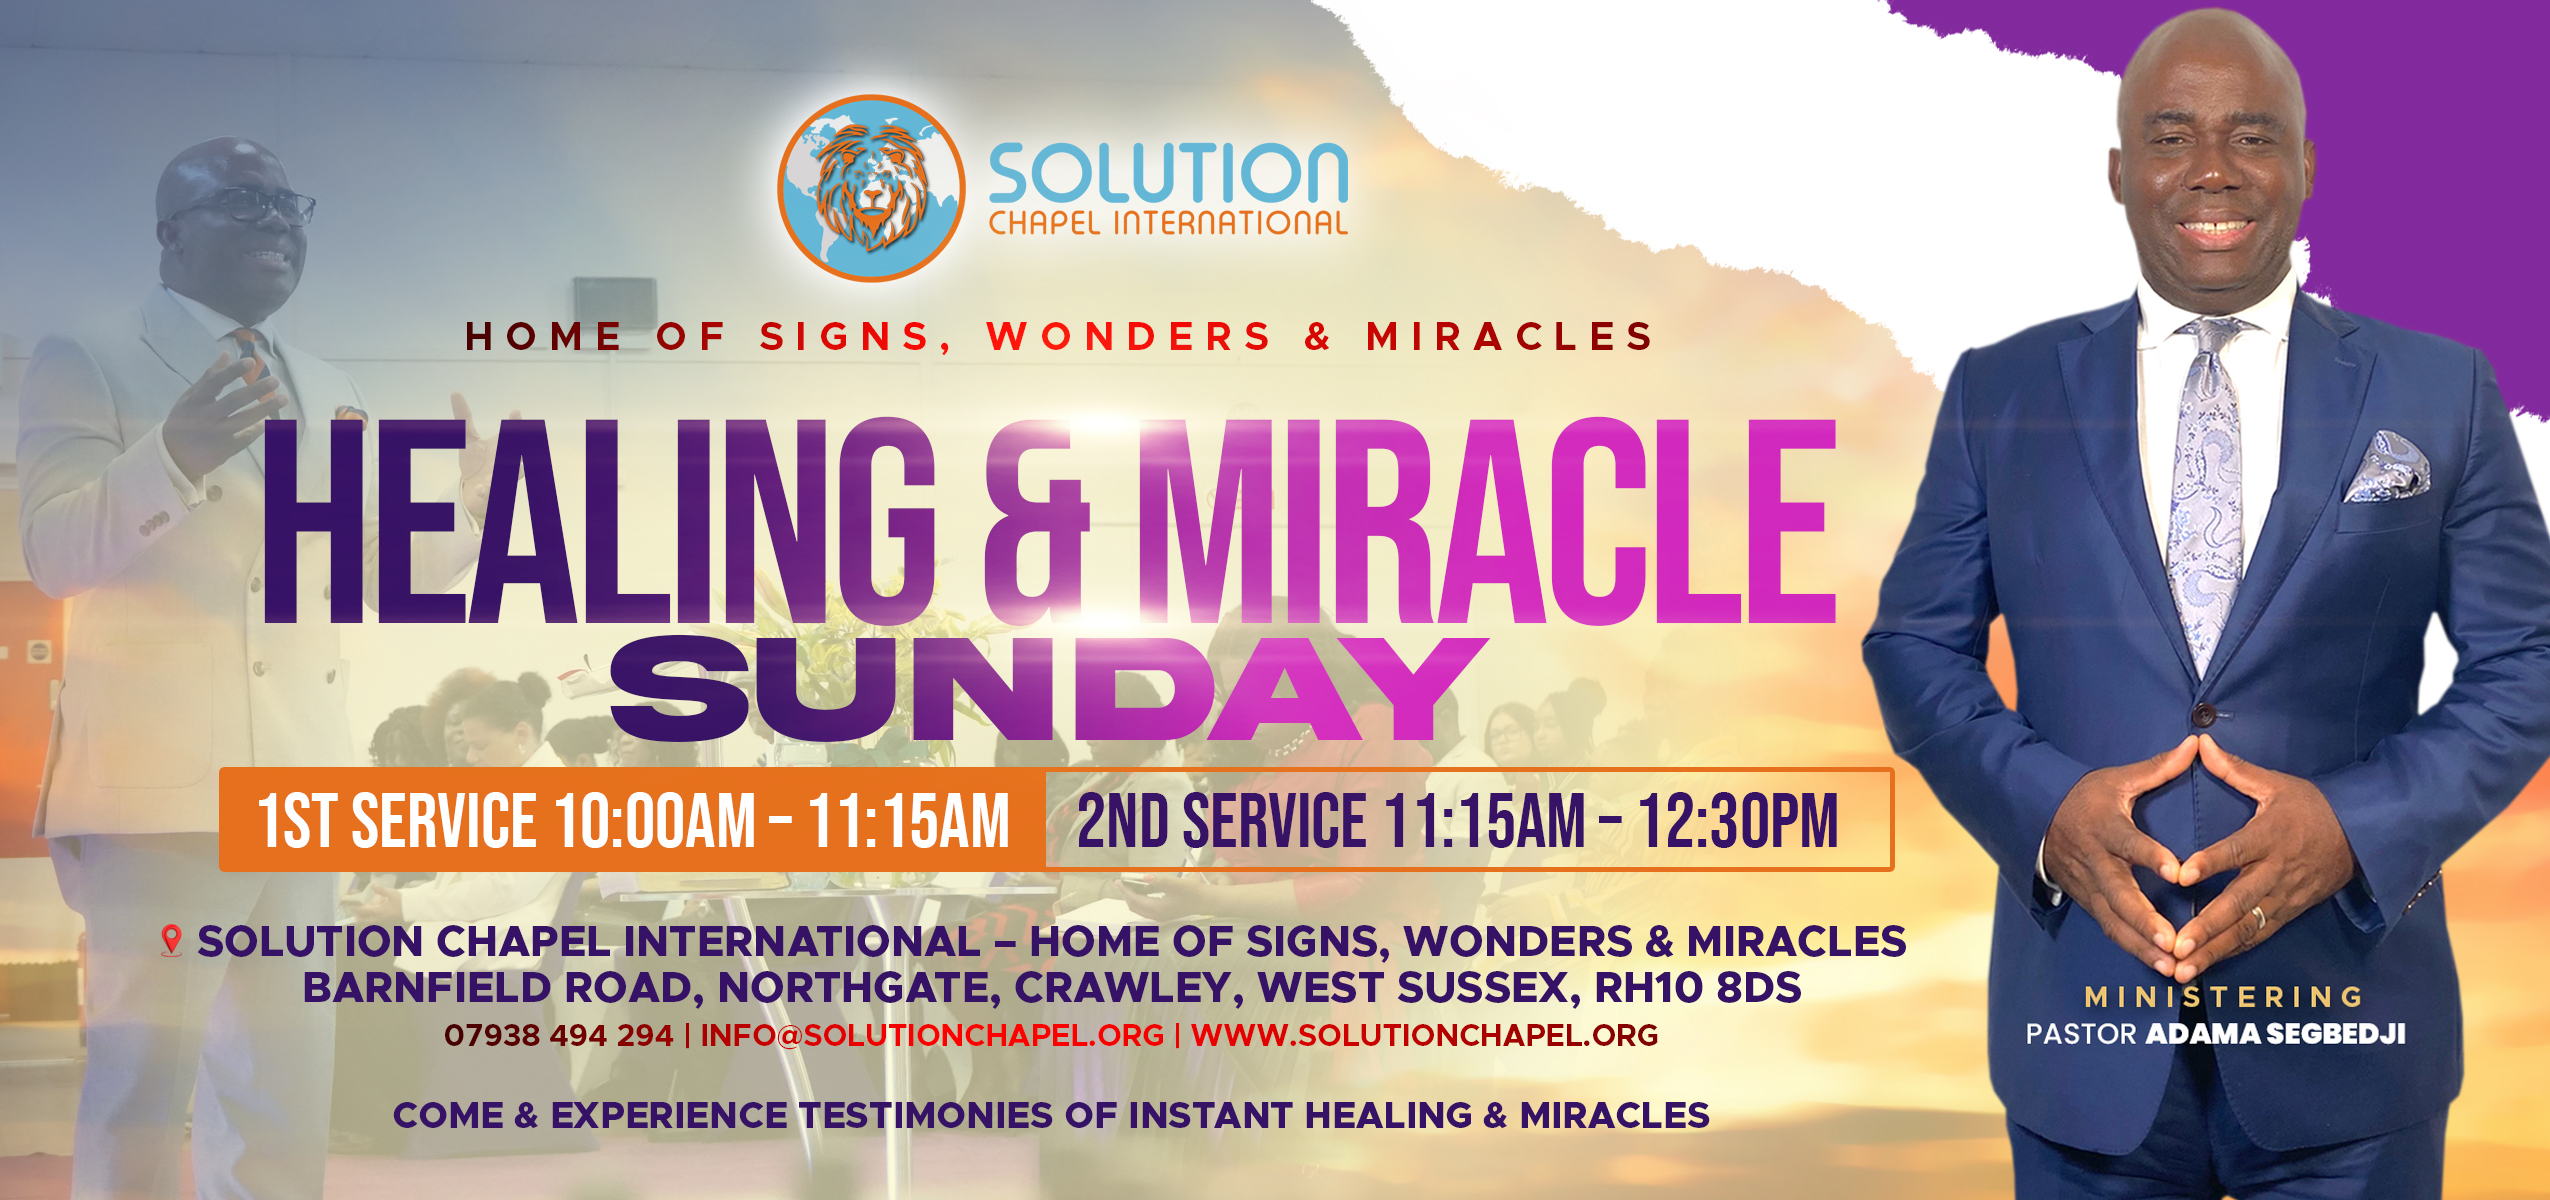 "Healing & Miracle Sunday"